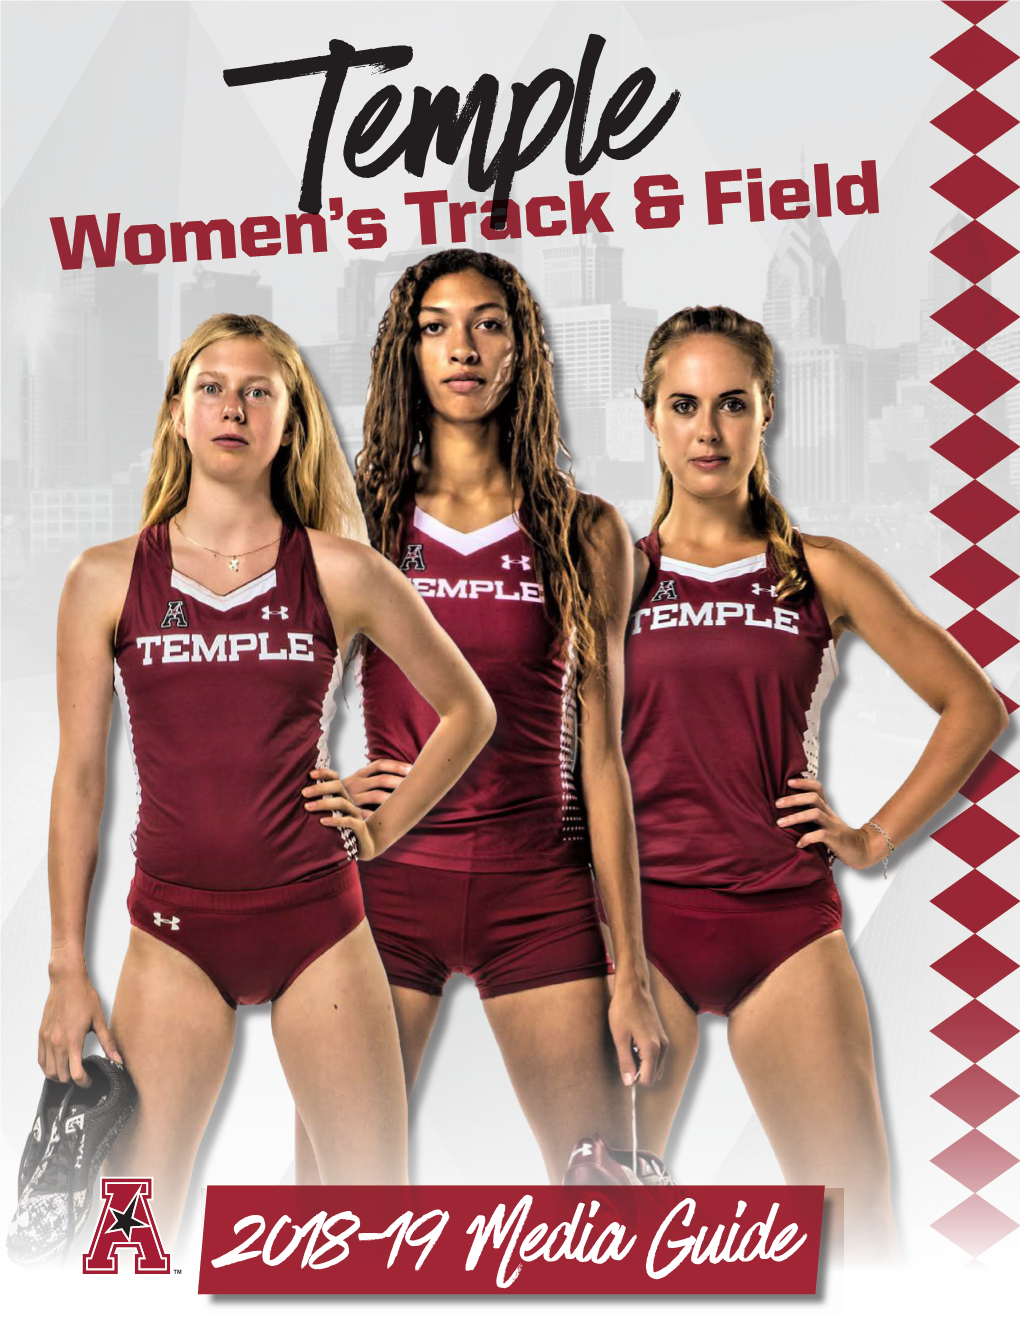 2018-19 Media Guide 2018-19 Temple Women's Track & Field TEMPLE TRACK & FIELD 2018 Temple University the Team Location